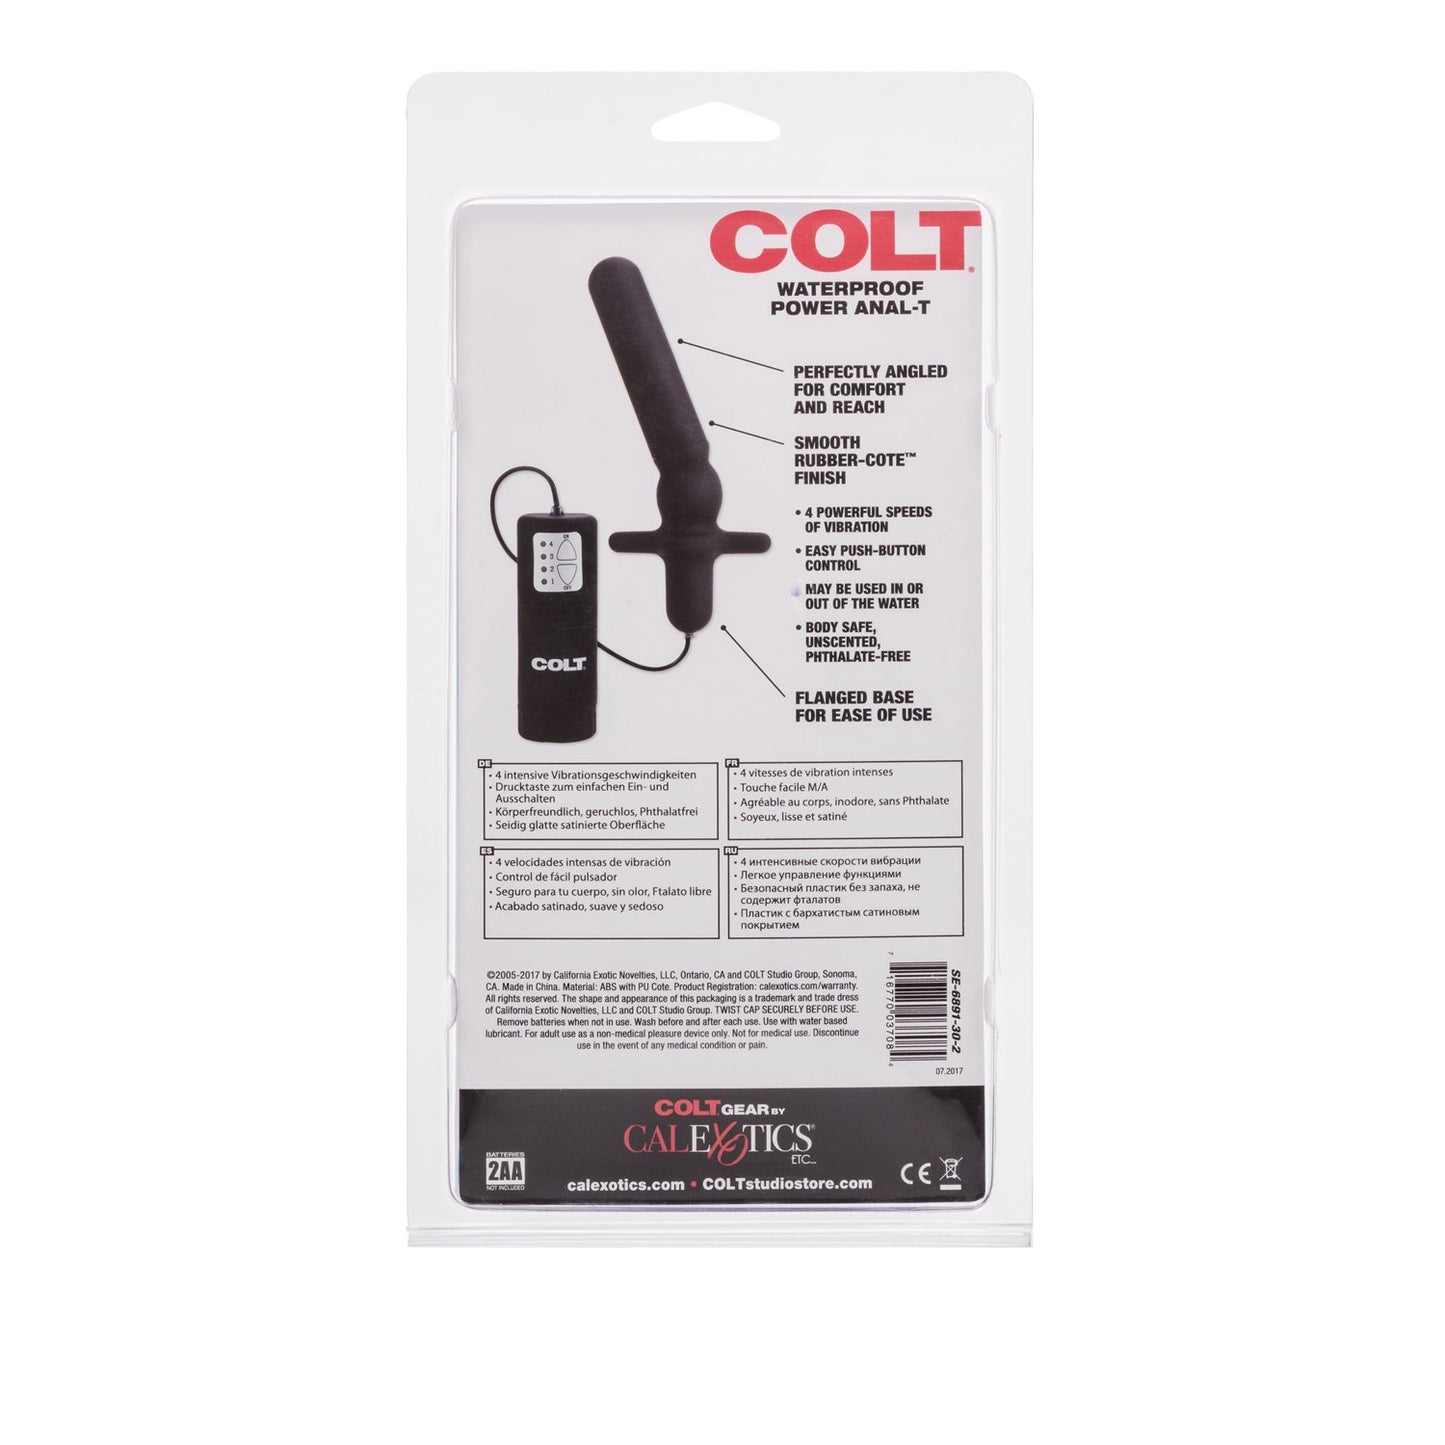 COLT Waterproof Power Anal-T